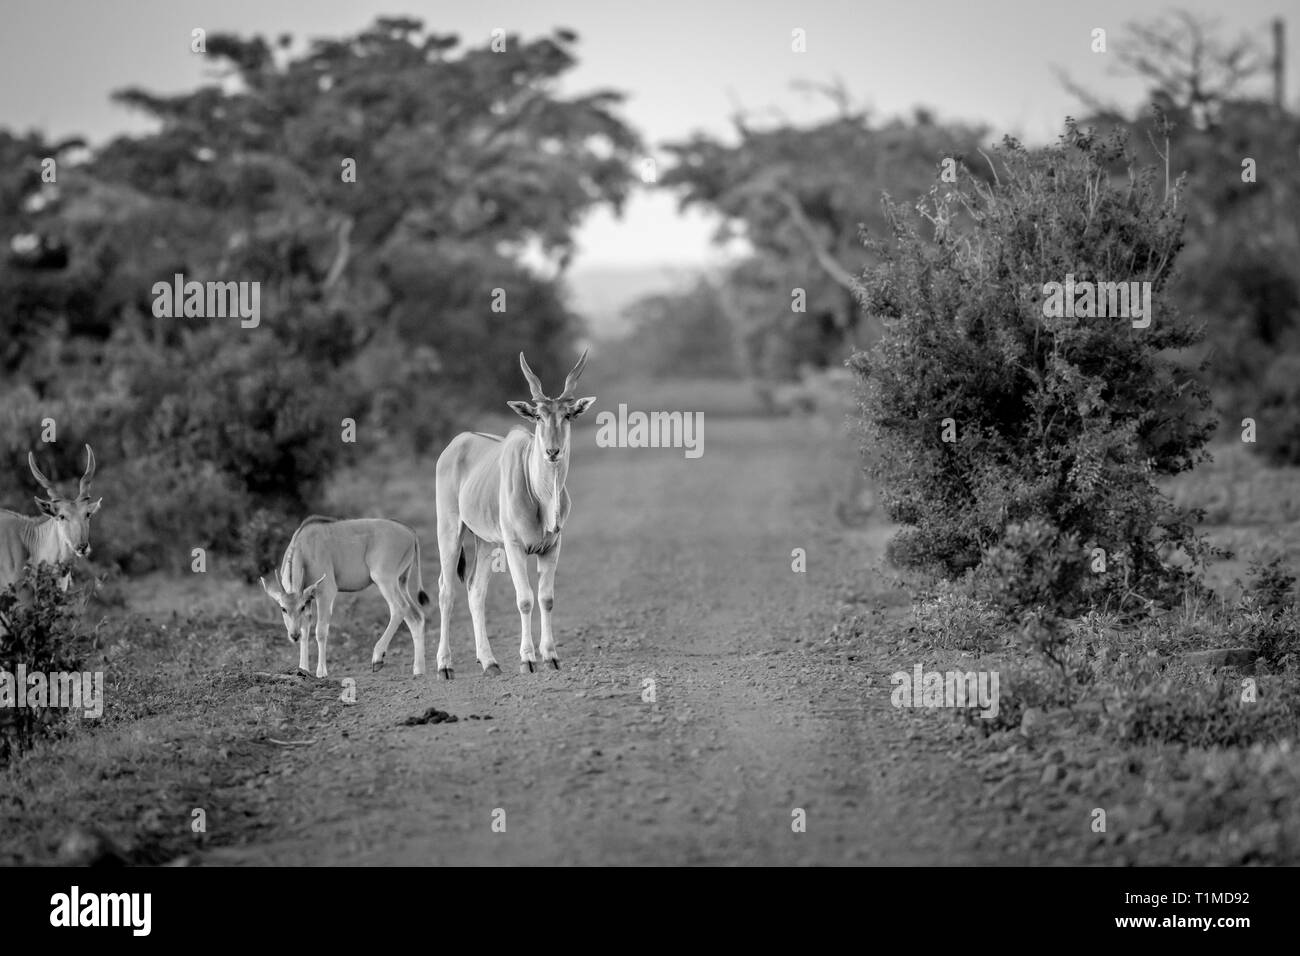 Eland in safari park Black and White Stock Photos & Images - Alamy